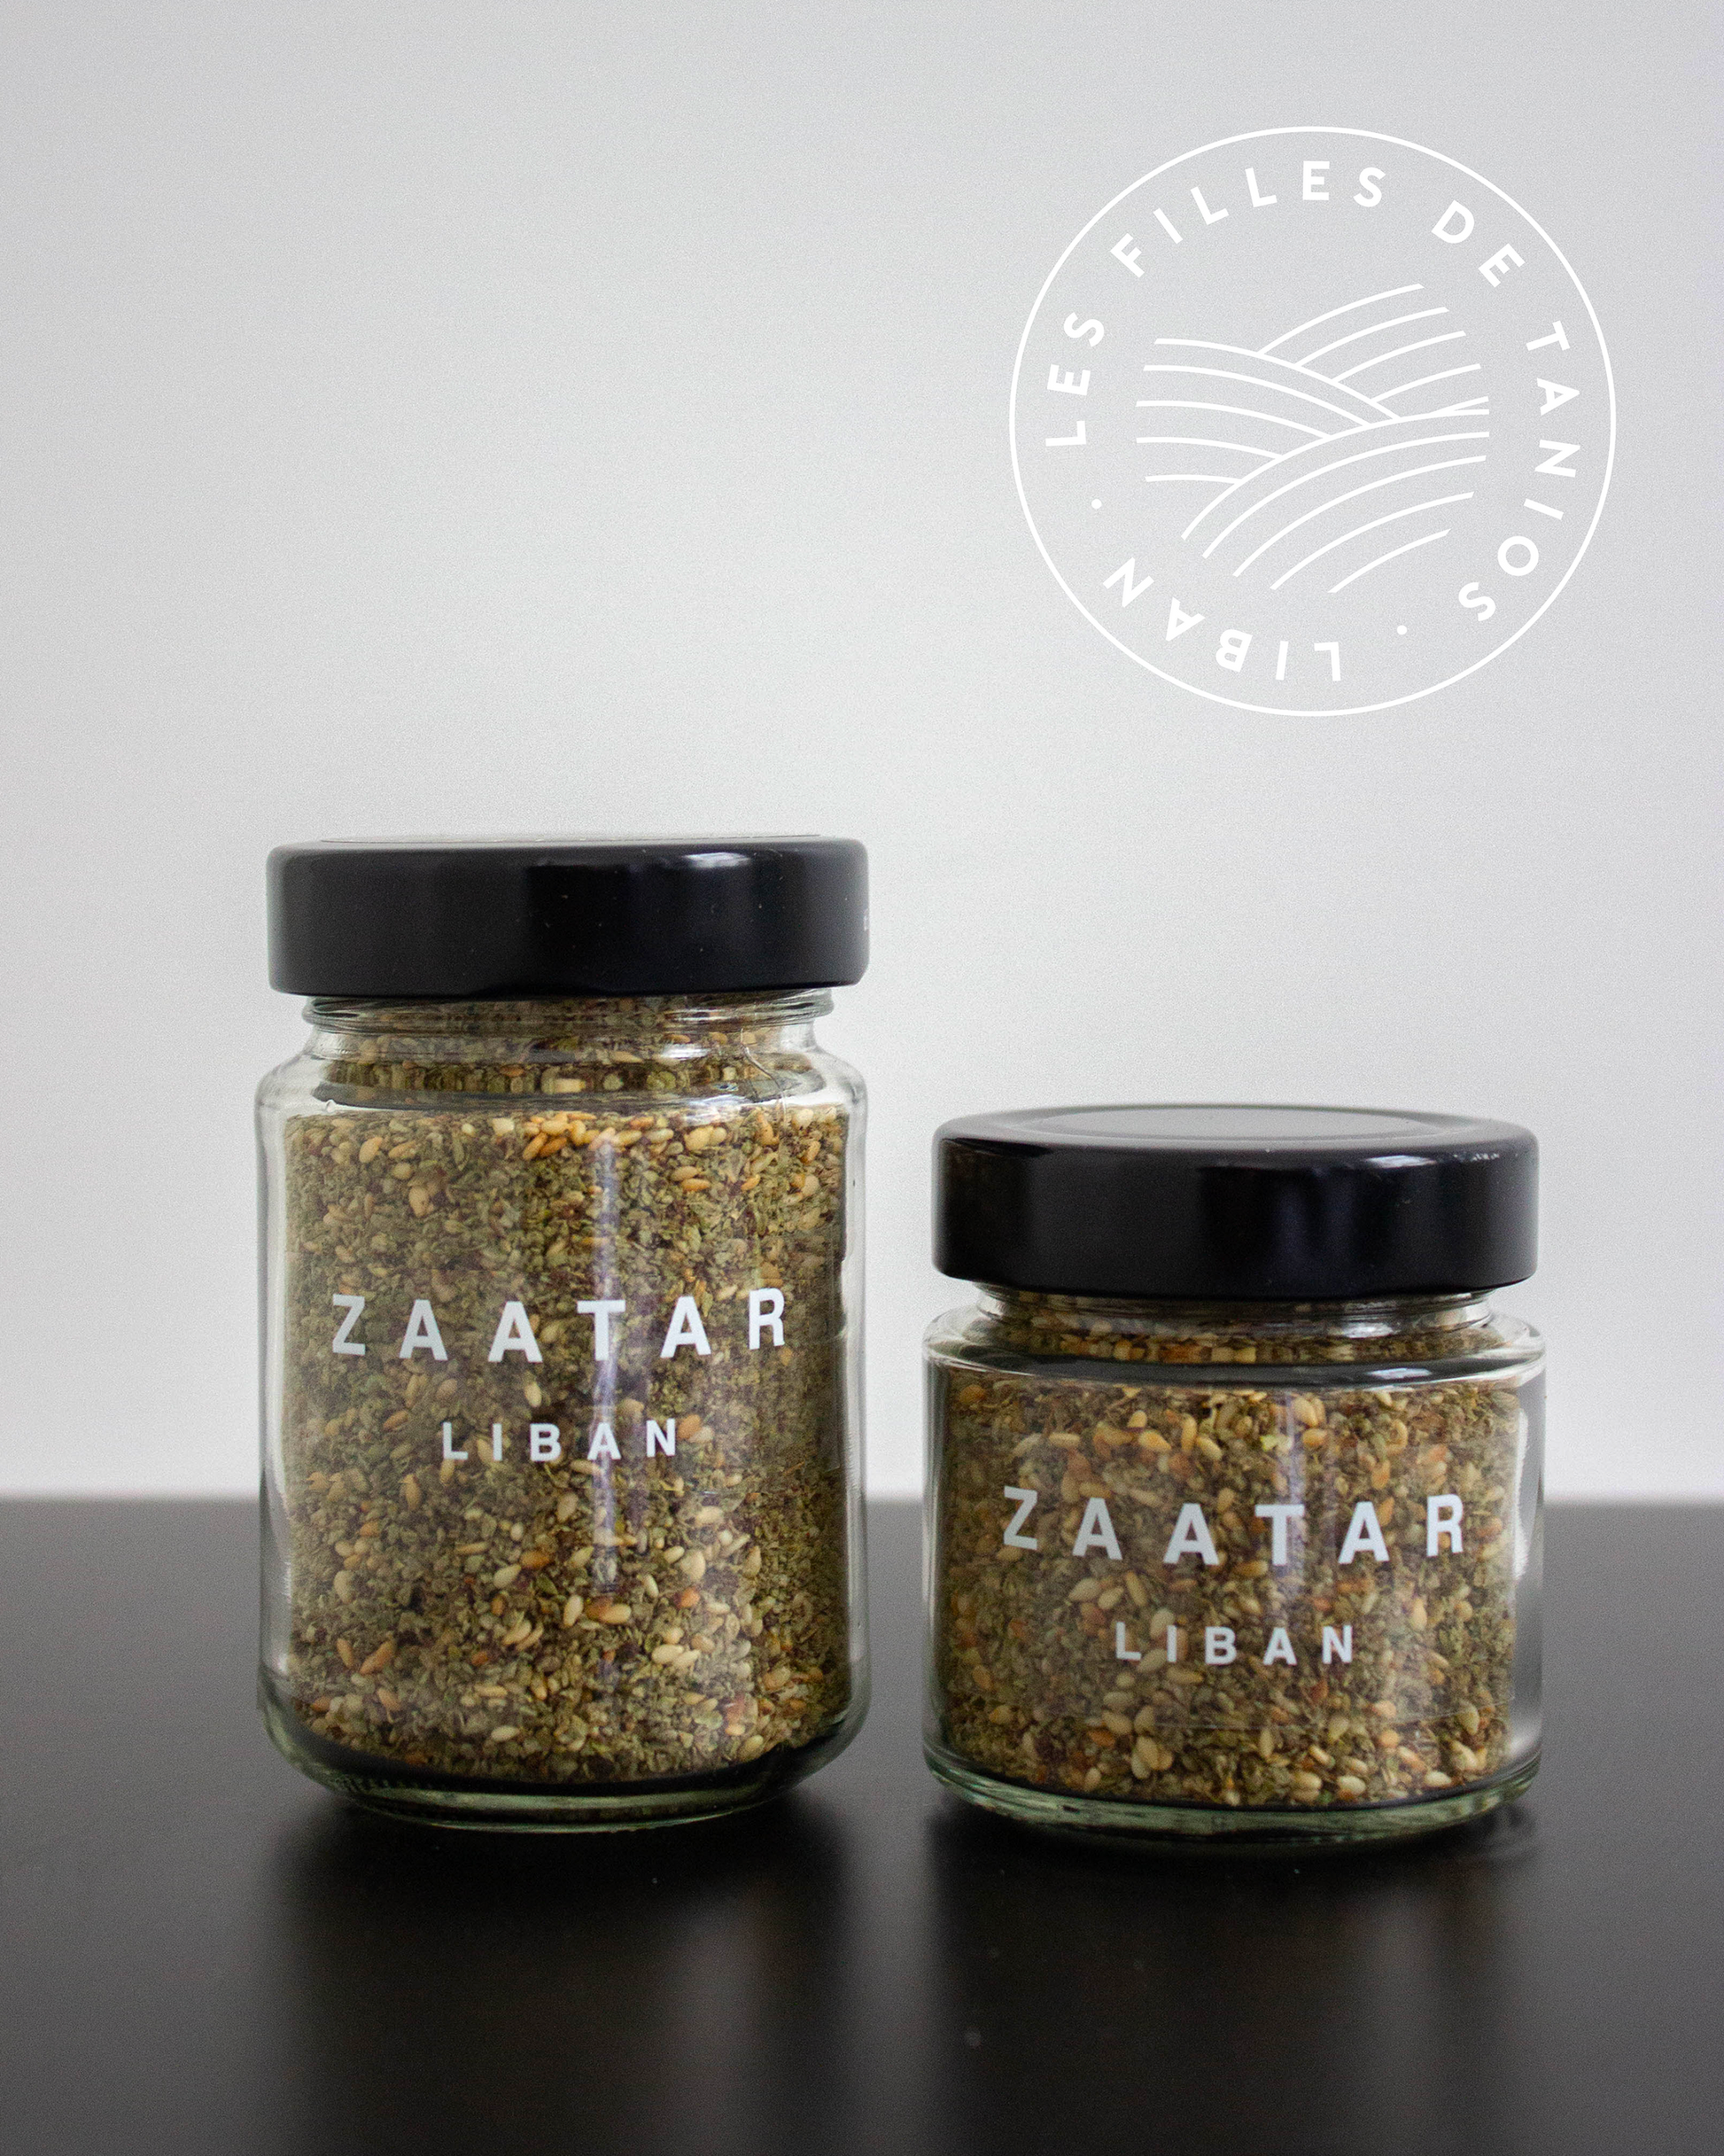 Zaatar frais, l'or vert du Levant - Maison AlephMaison Aleph